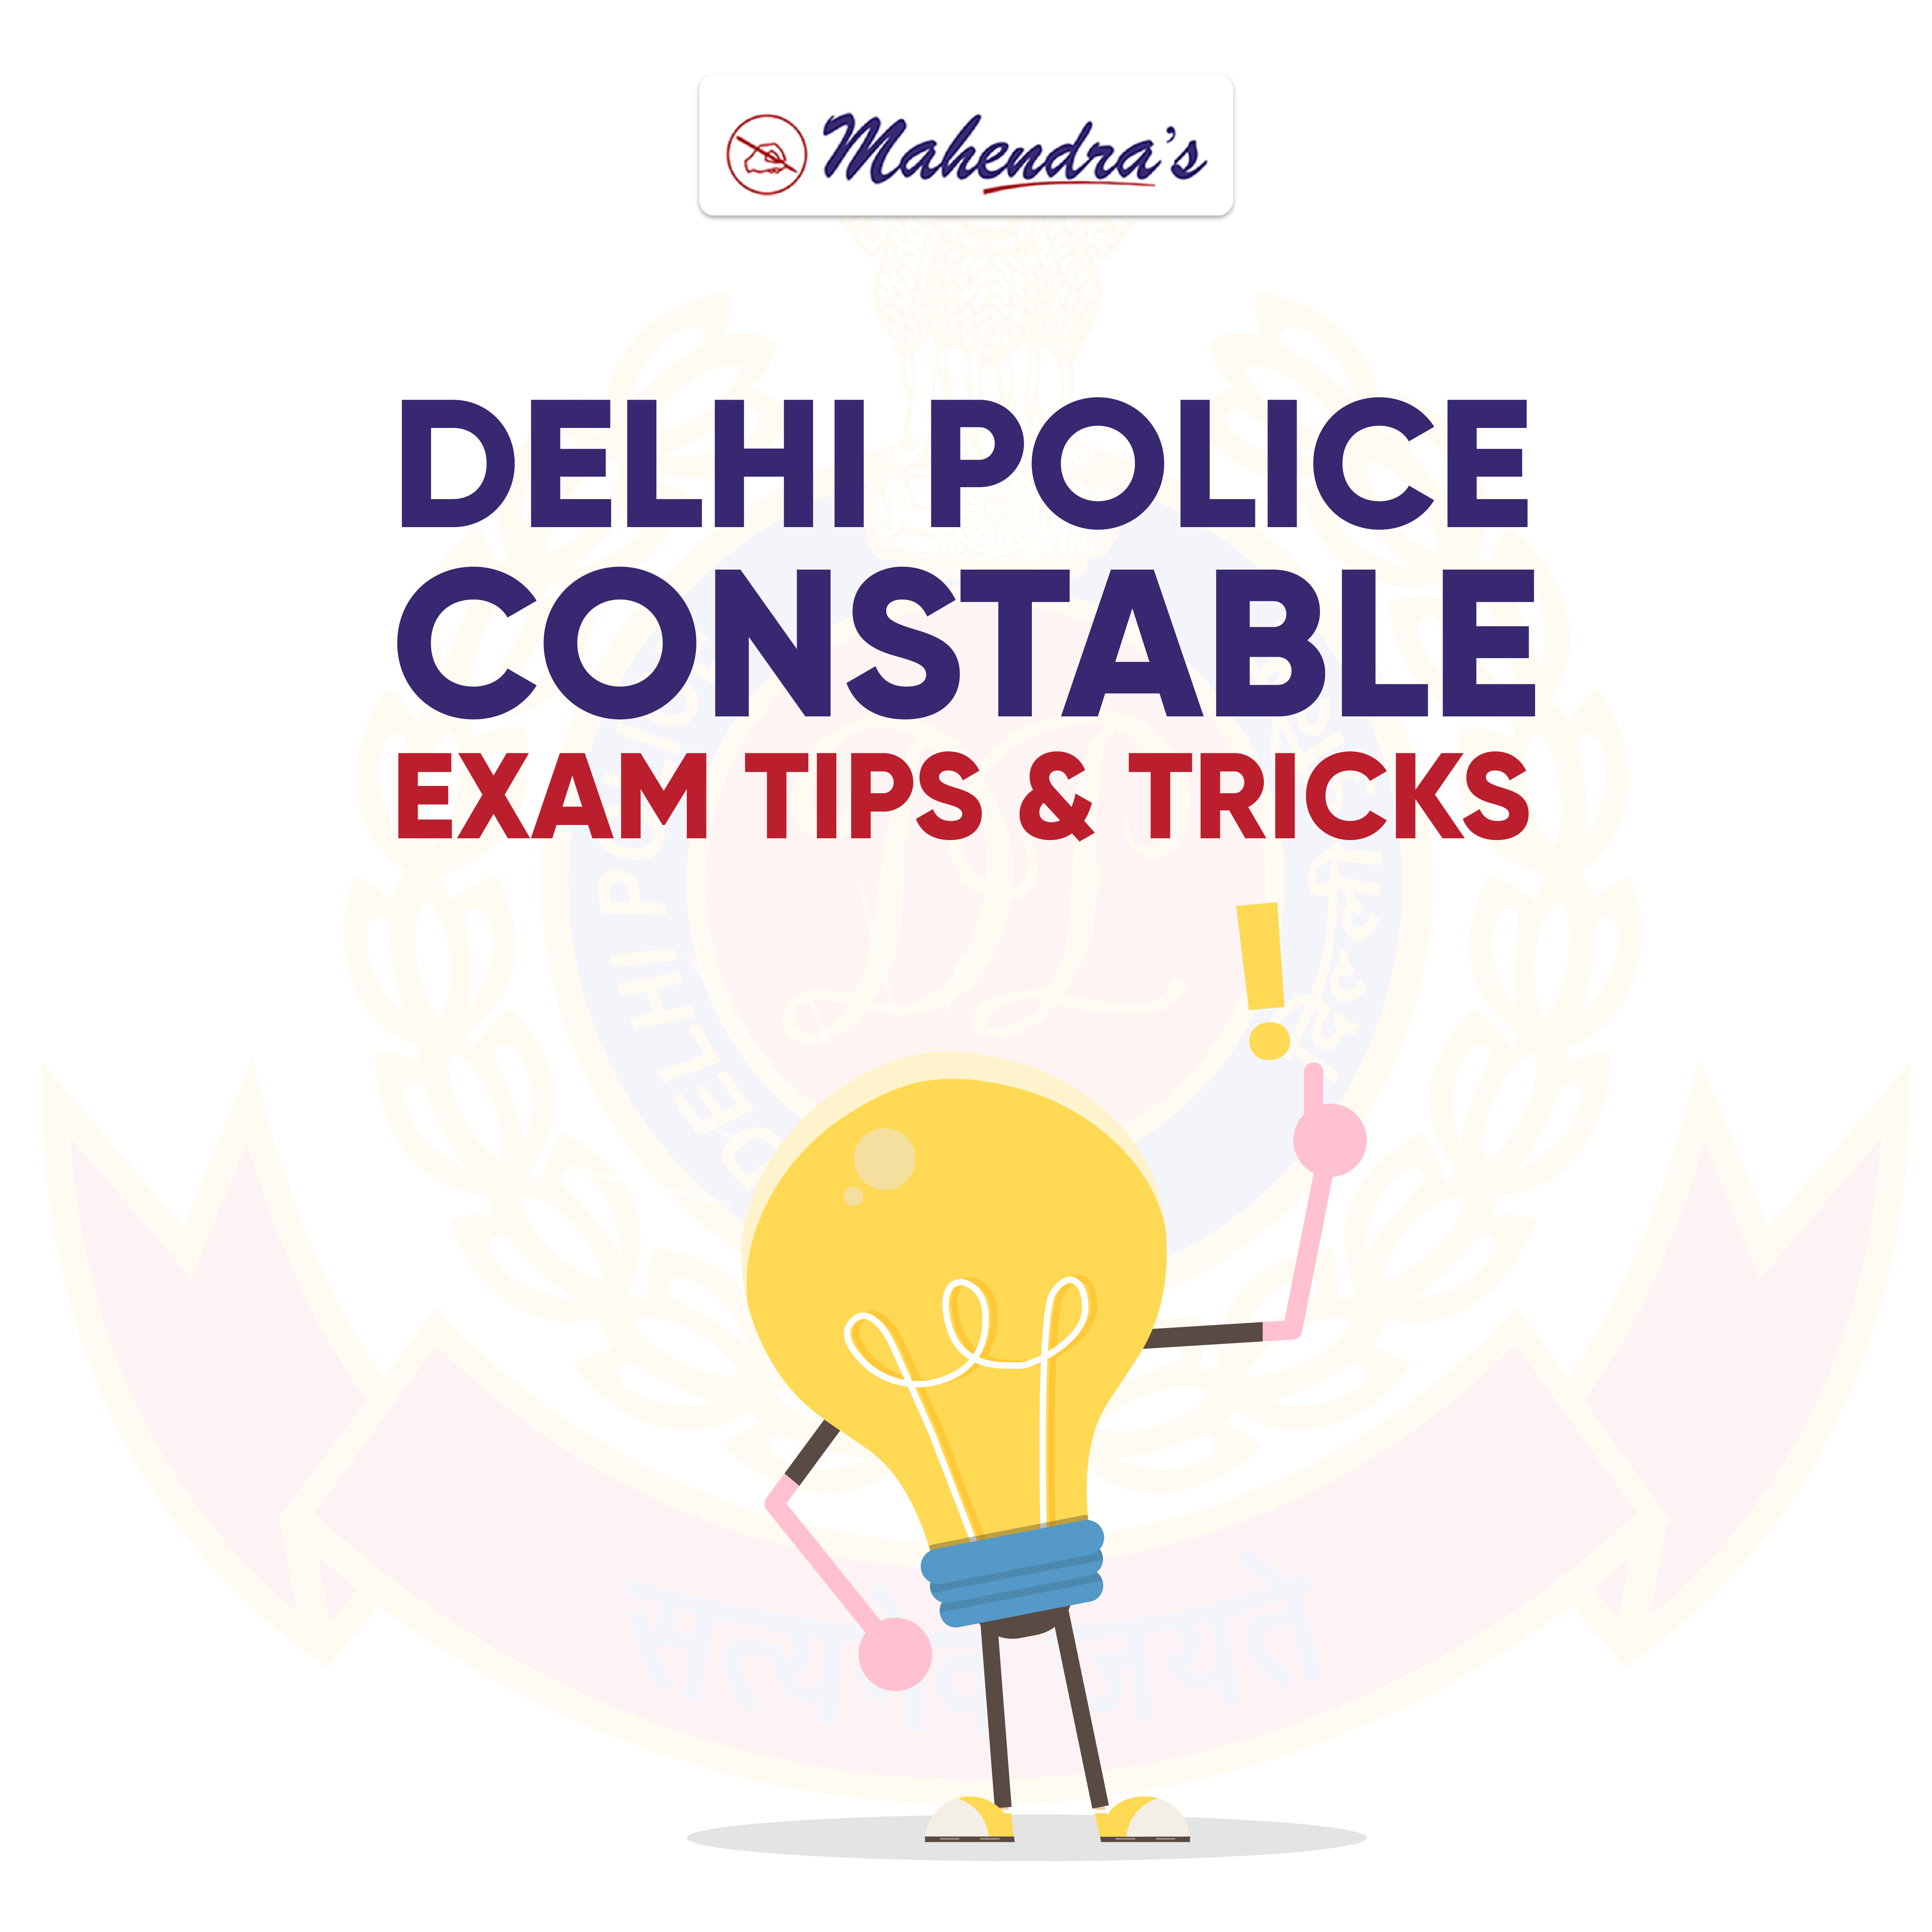 How to Prepare for Delhi Police Constable Exam - Tips & Tricks